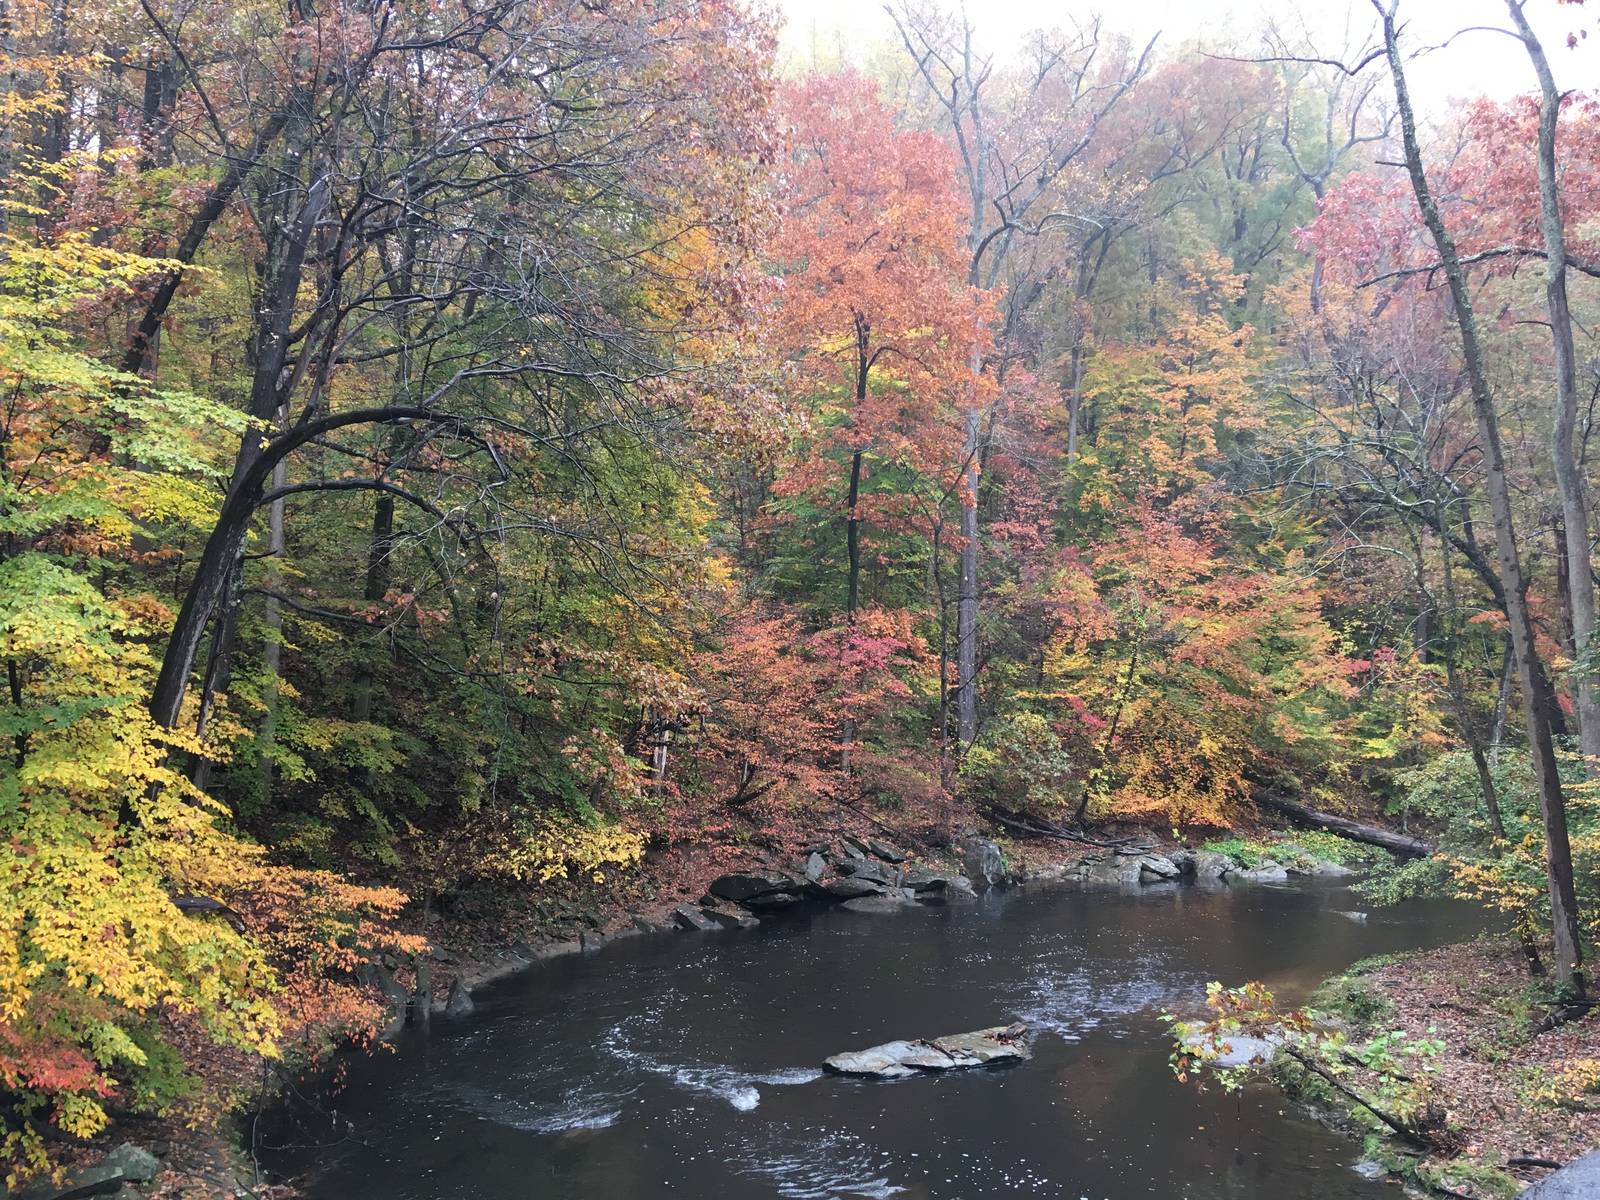 An autumn treat in Washington DC's rock creek